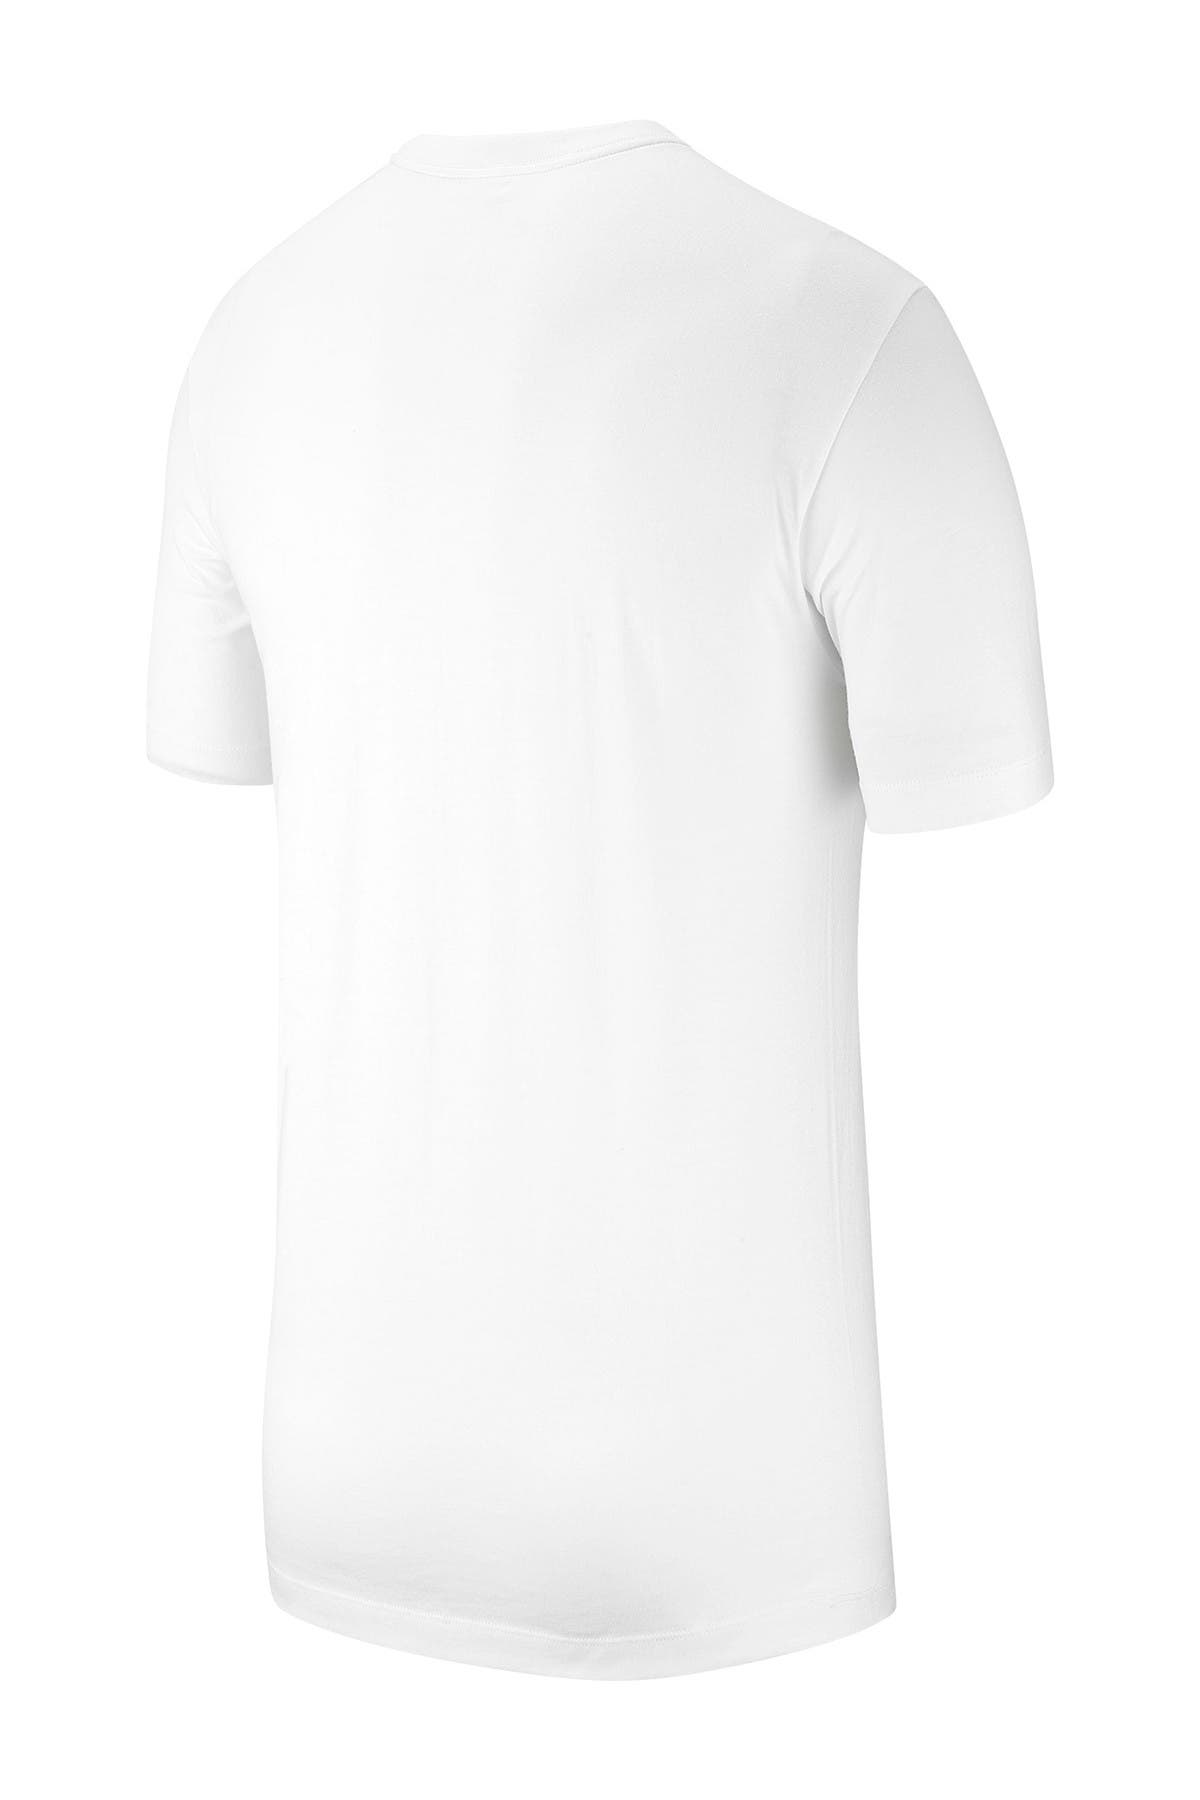 Nike | Swoosh Logo T-Shirt | Nordstrom Rack